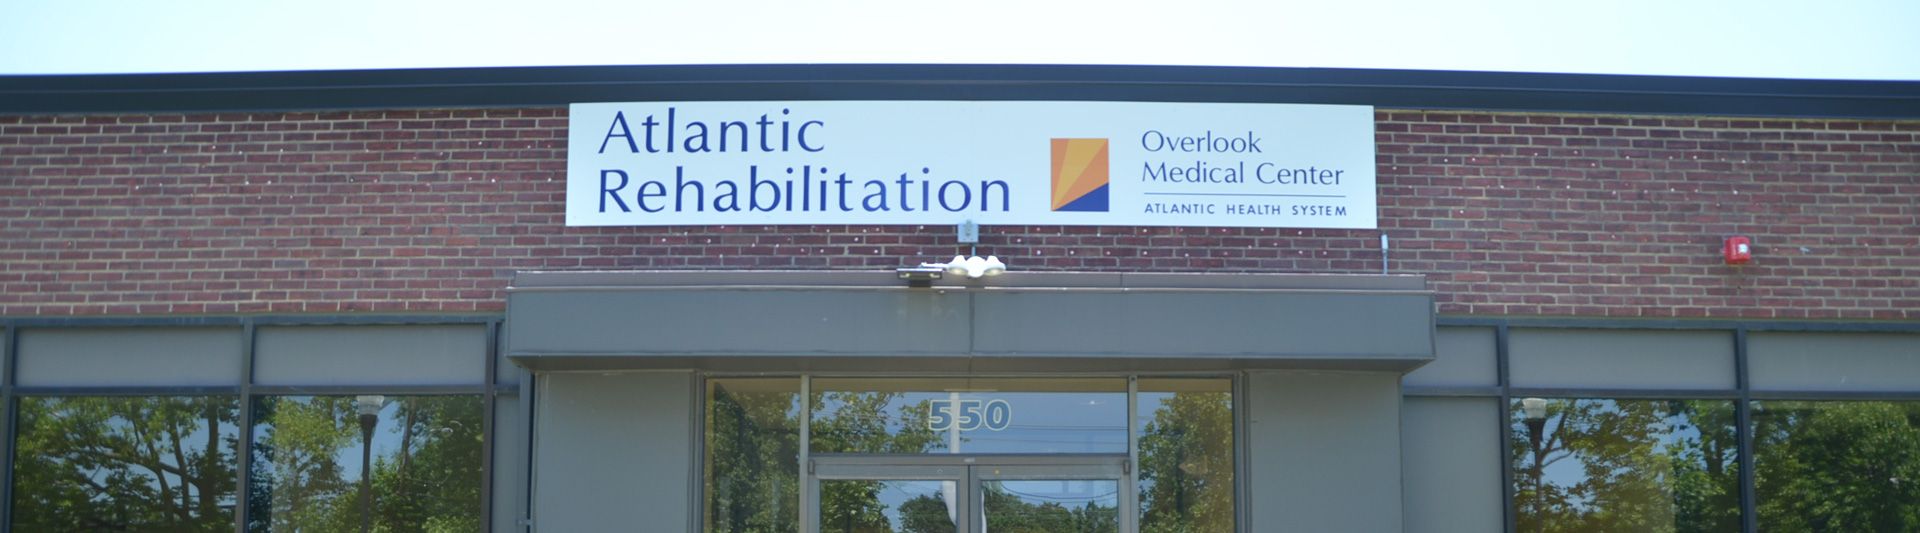 Atlantic Rehabilitation